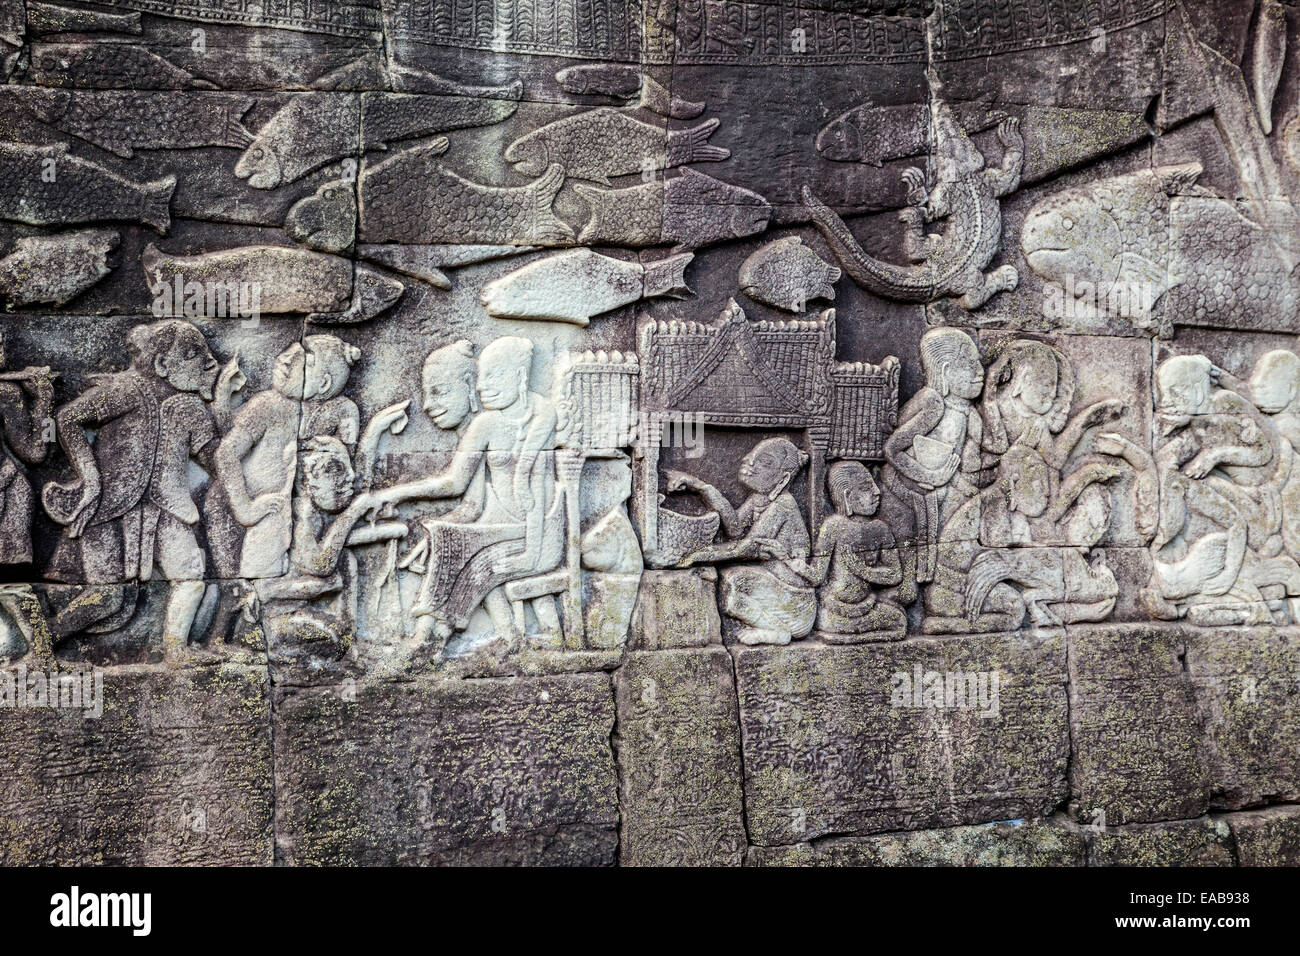 Kambodscha, Bayon Tempel, Ende des 12.-13.. Jahrhundert.  Basrelief Szene zeigt den Alltag. Stockfoto